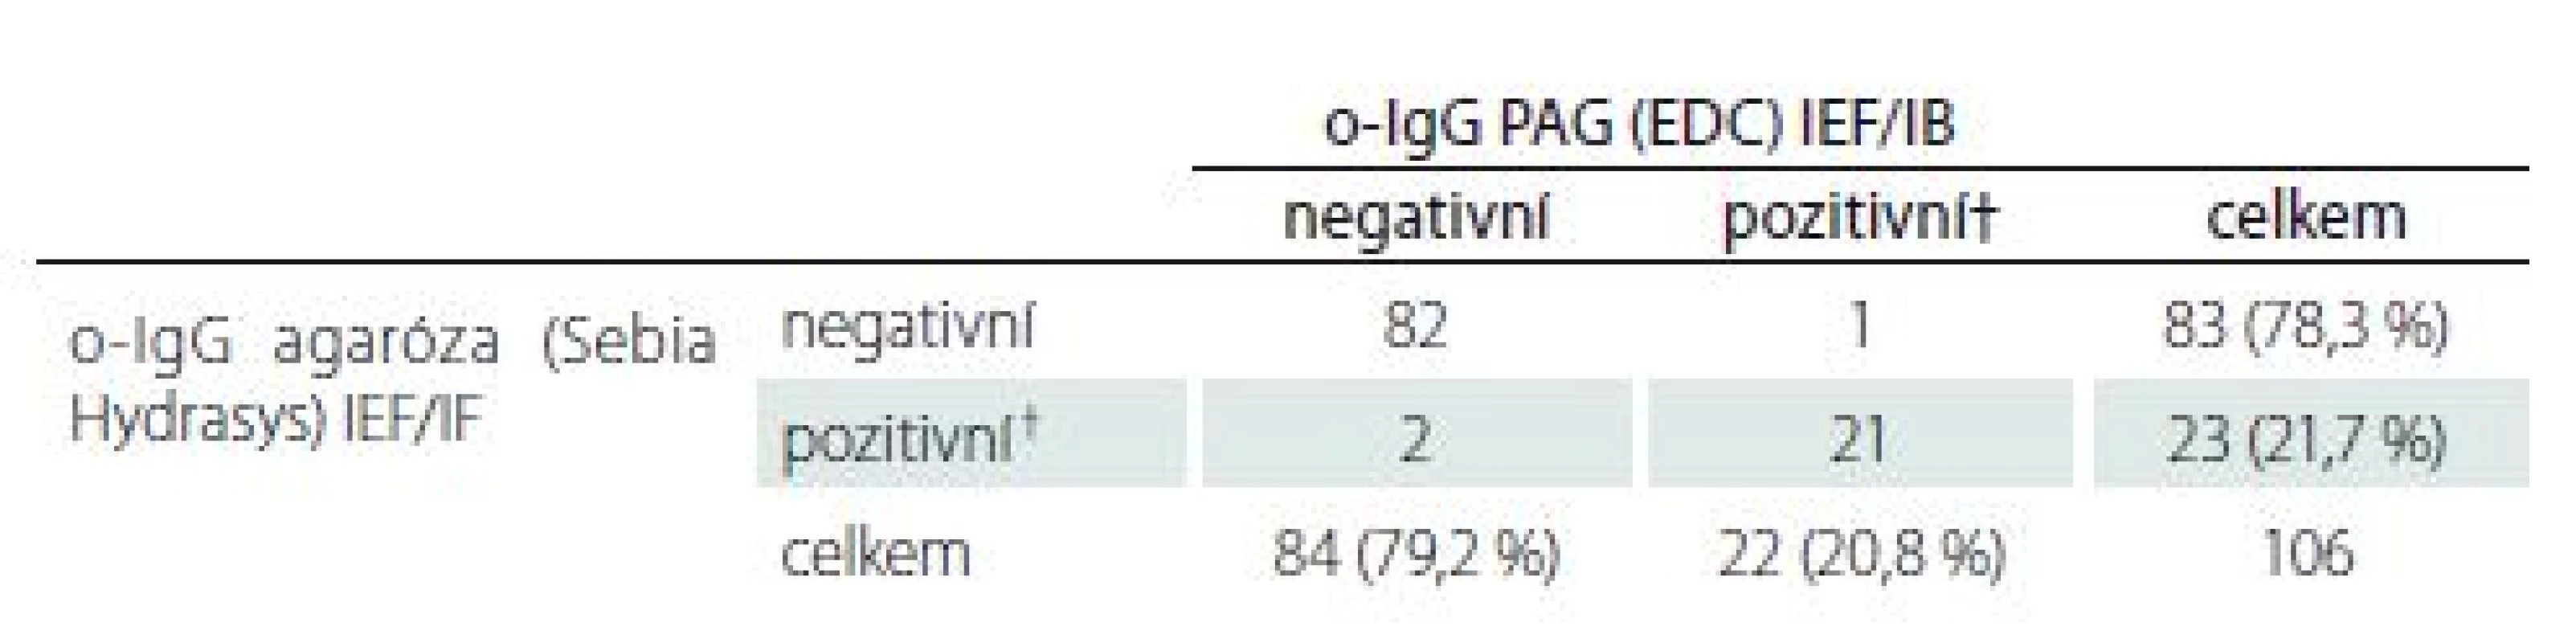 Srovnání mezi agarózovou IEF/IF a PAG IEF/IB. Chi-kvadrát 88,052; p < 0,0001;
κ = 0,9154, 95% CI 0,8211–1,0000.